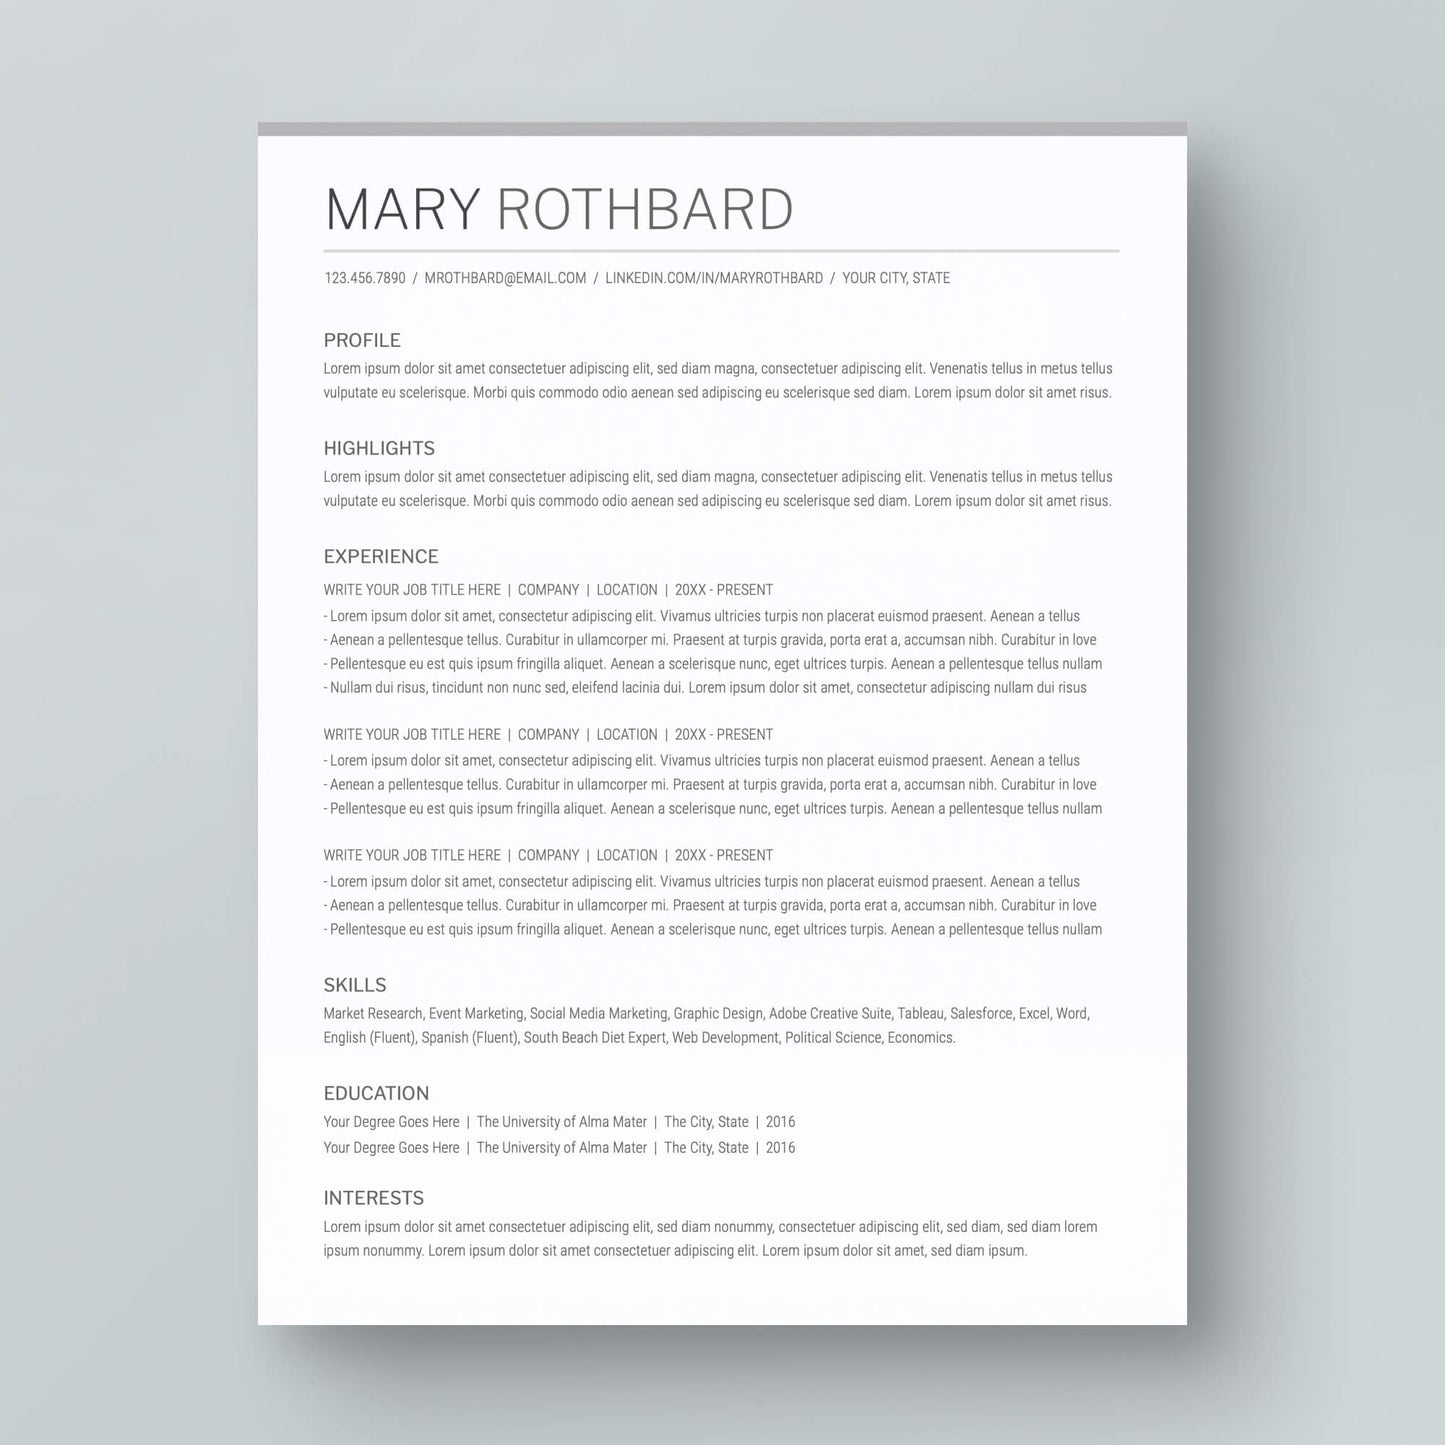 Resume Template: Mary Rothbard - MioDocs